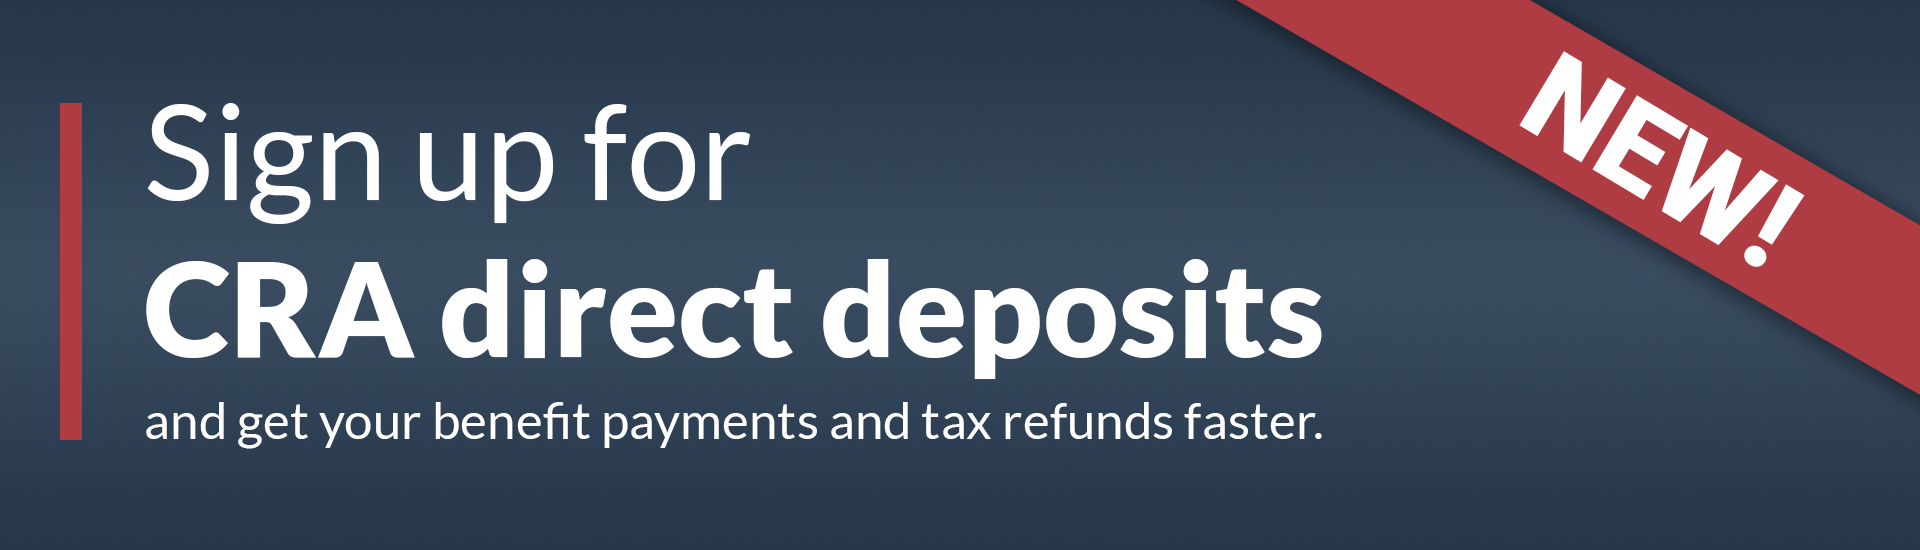 CRA direct deposit